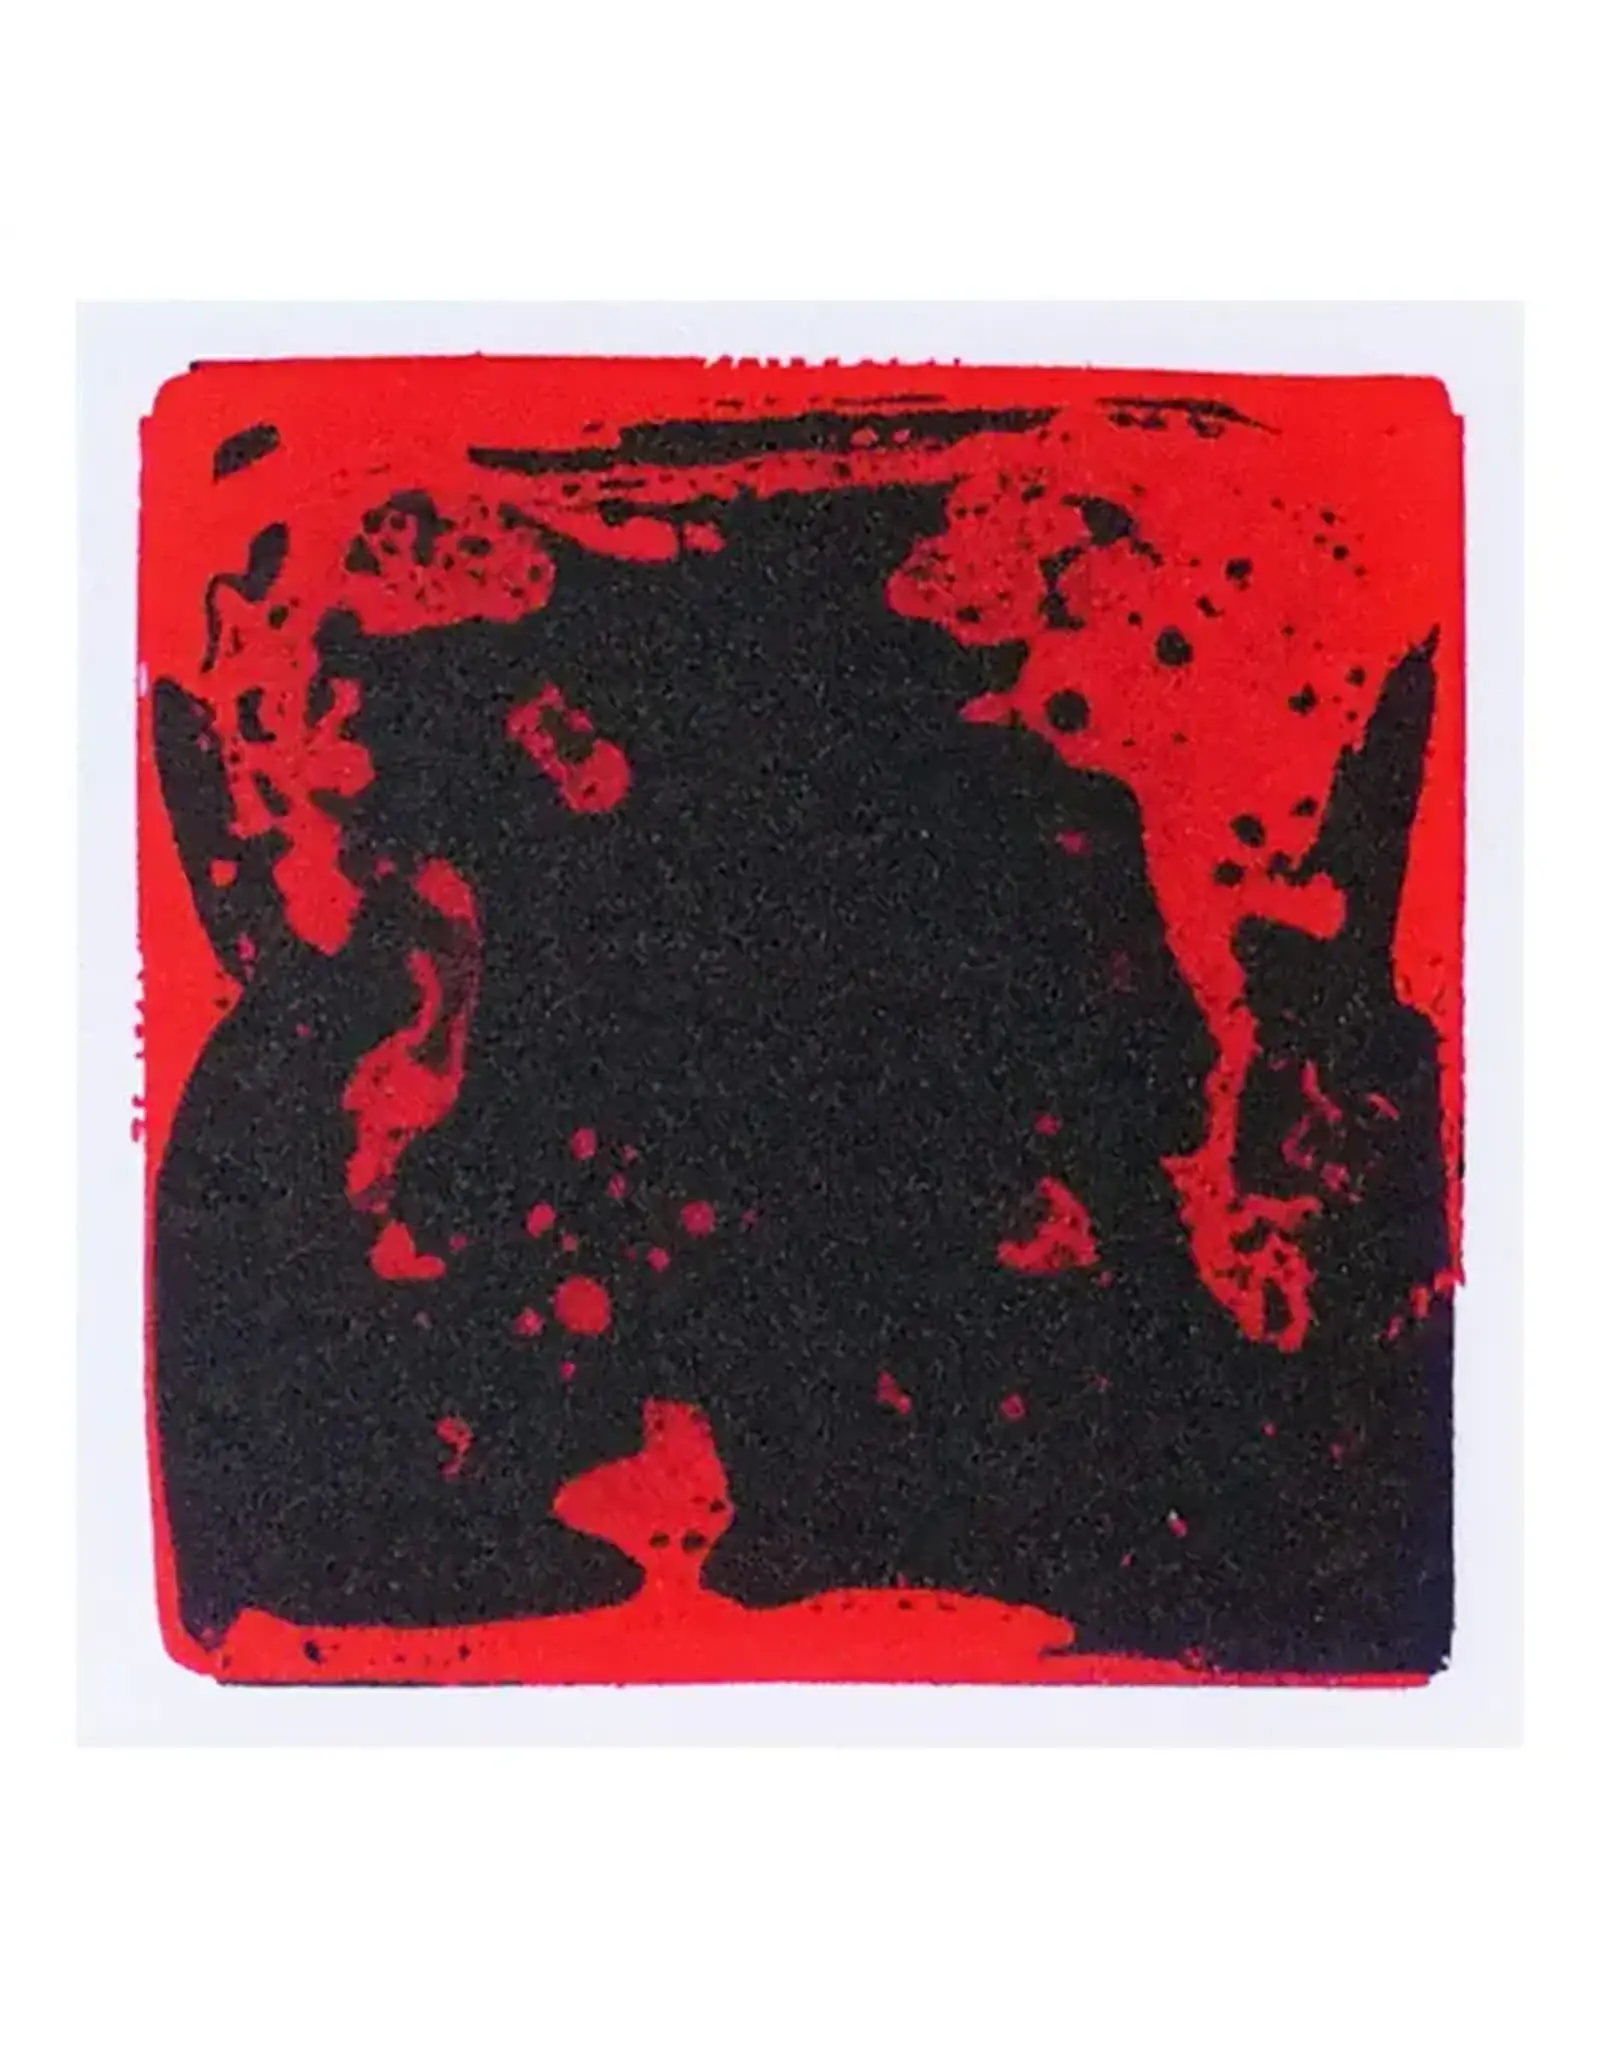 Spooner Inc. Liquid Floor Tiles Red and Black